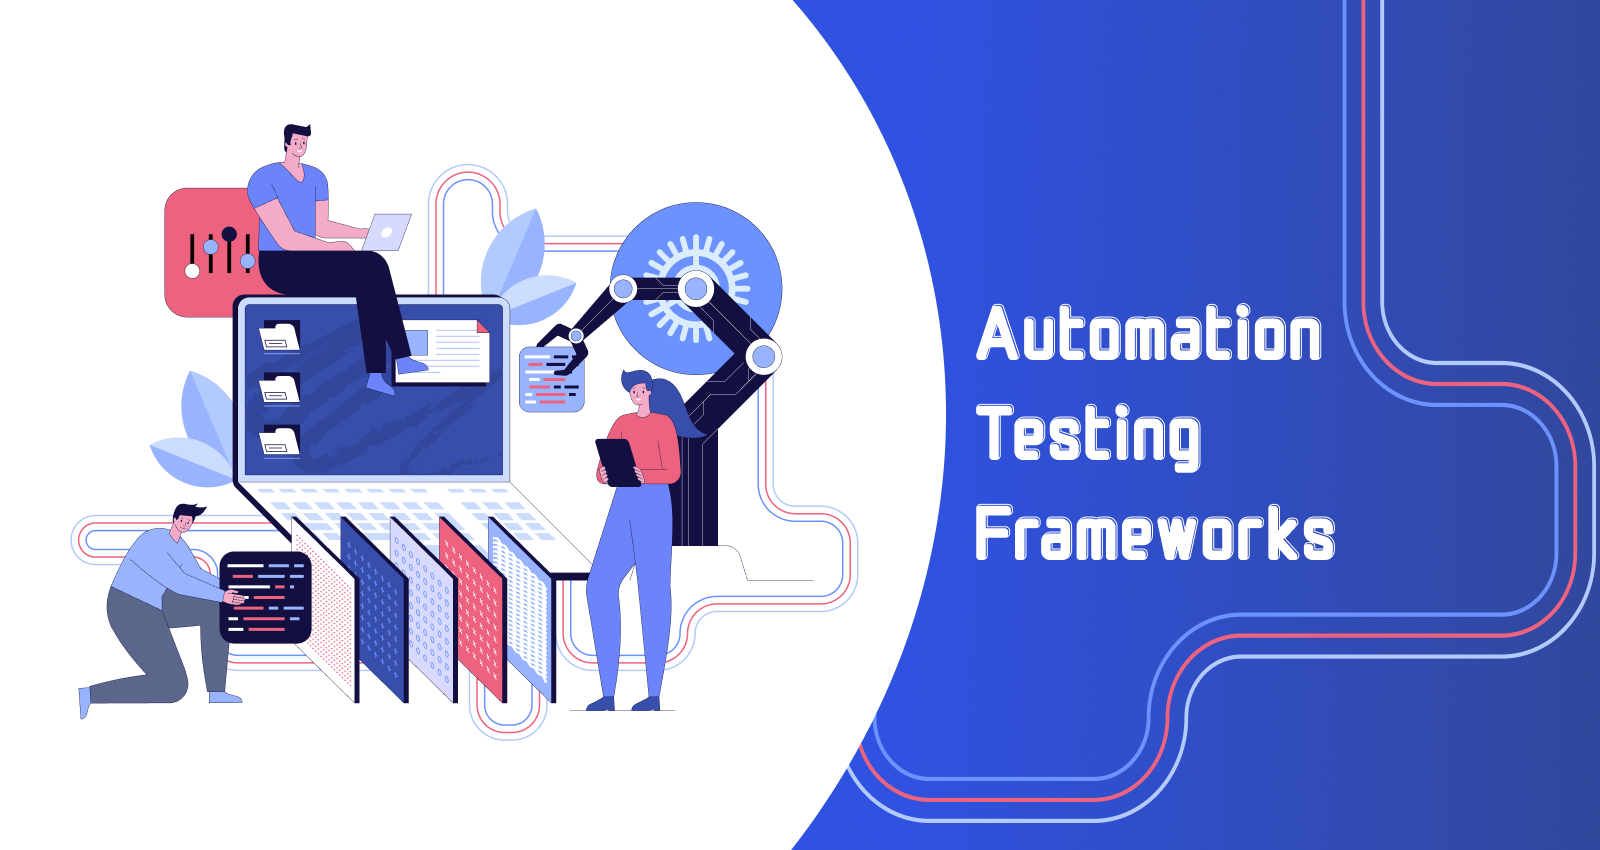 Automation Testing Framework, Software Testing, IT Testing Framework, Testing Framework, Tips & Best Practices of Automation Testing, IT Automation Framework, IT Services, IT Automation